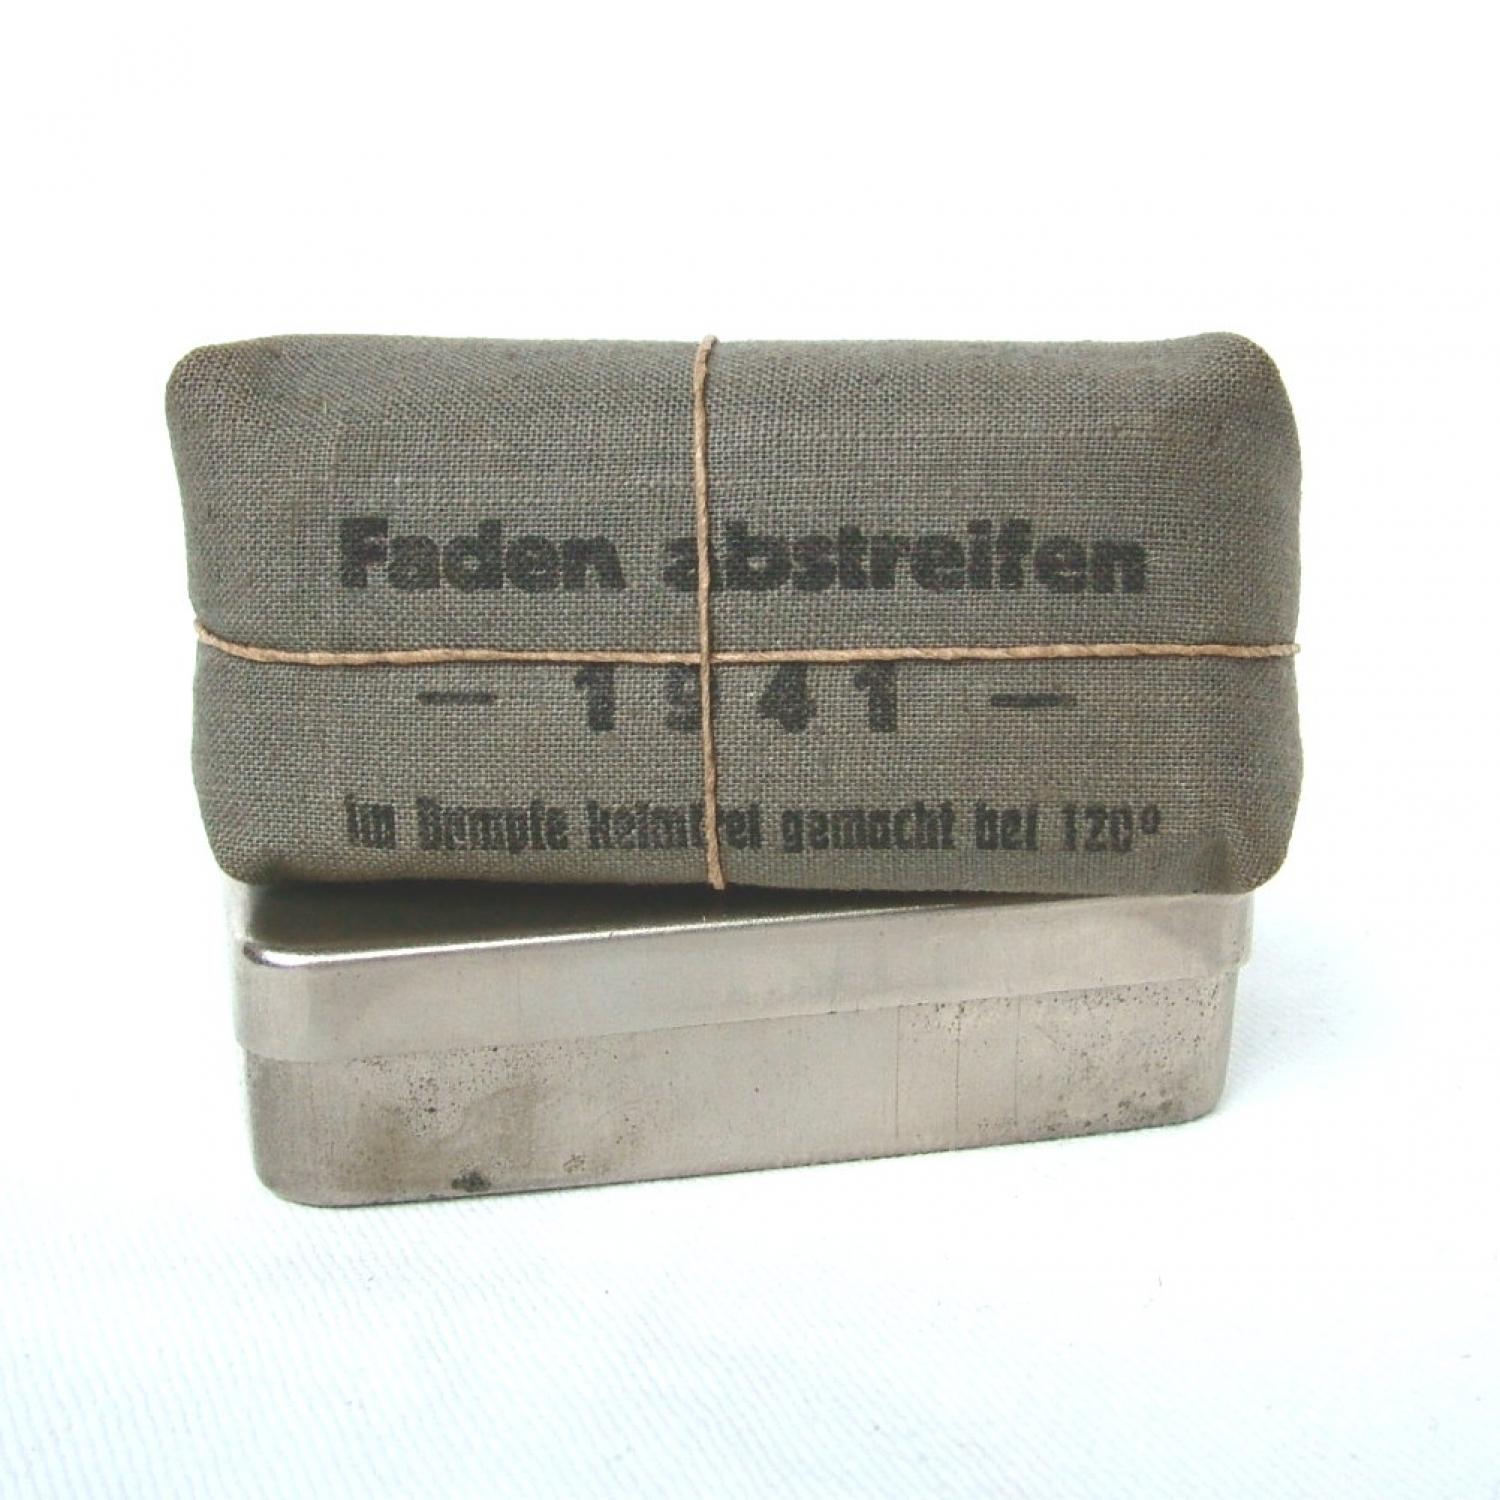 Luftwaffe First Aid Kit Syringe